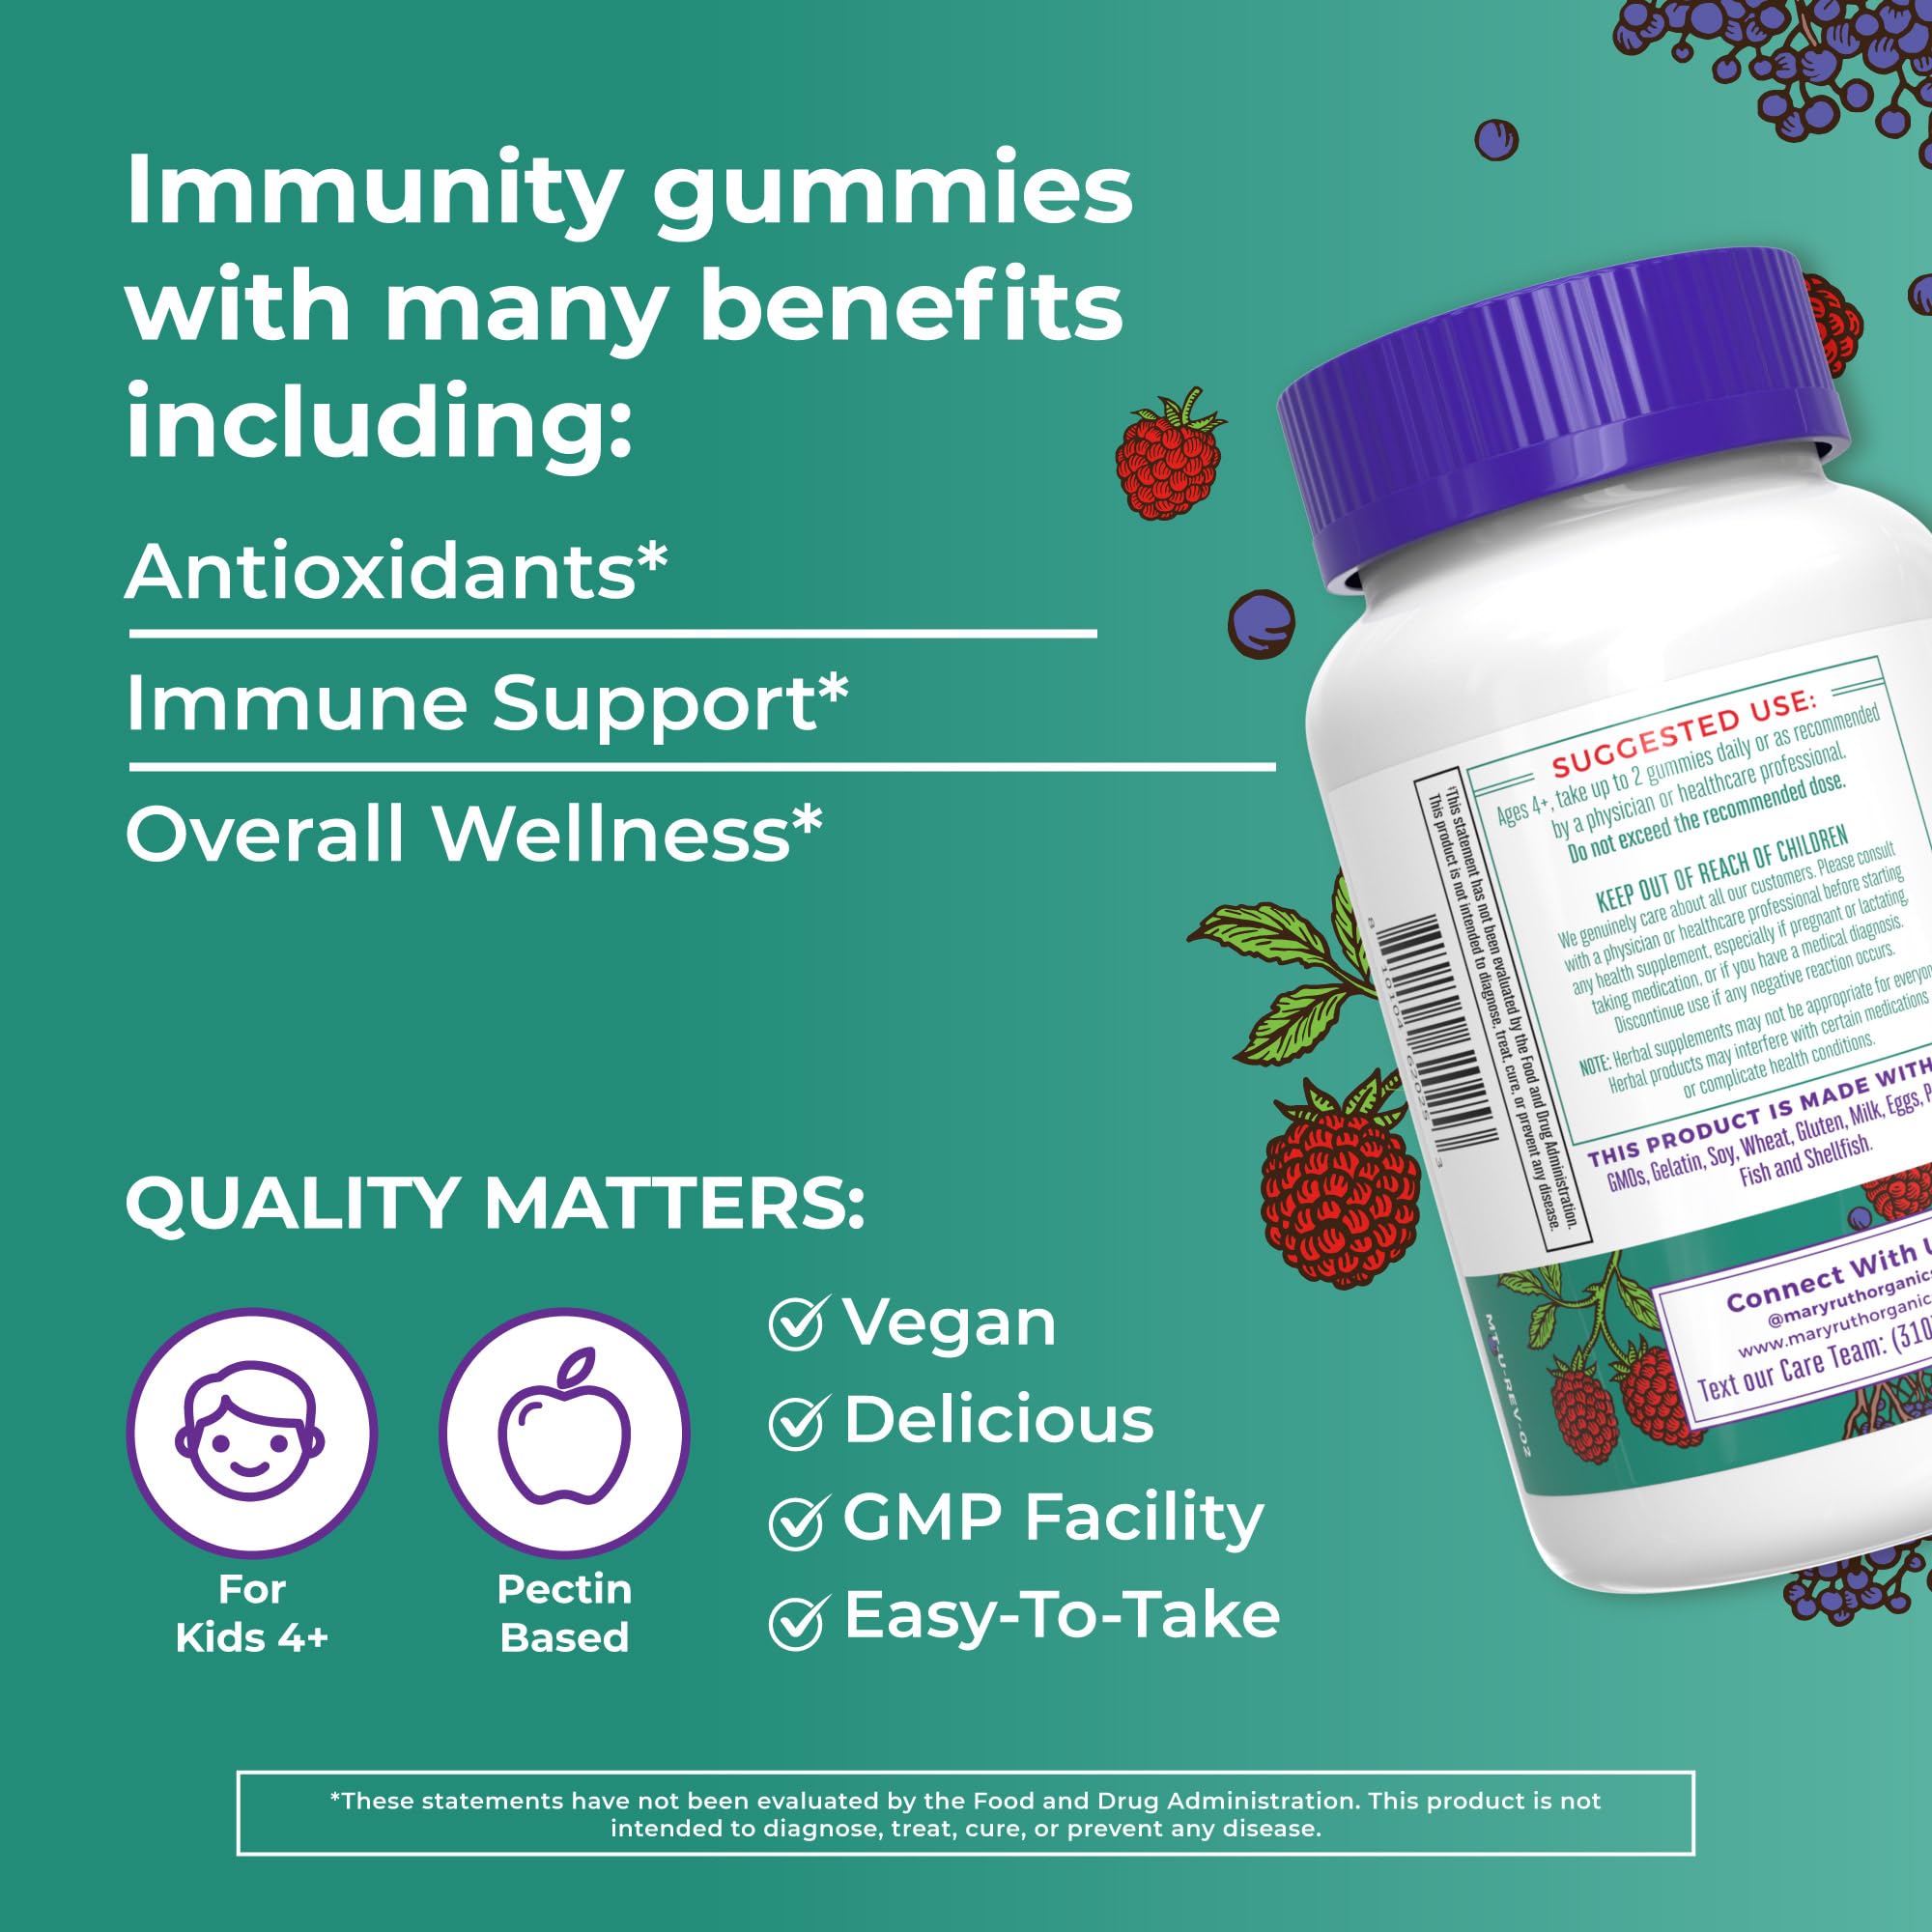 MaryRuth's Kids Multivitamin Gummies, Kids Probiotic Gummies, and Kids Immunity Gummies, 3-Pack Bundle for Immune Support, Bone Health, Digestive & Gut Health, and Overall Health, Vegan, Non-GMO